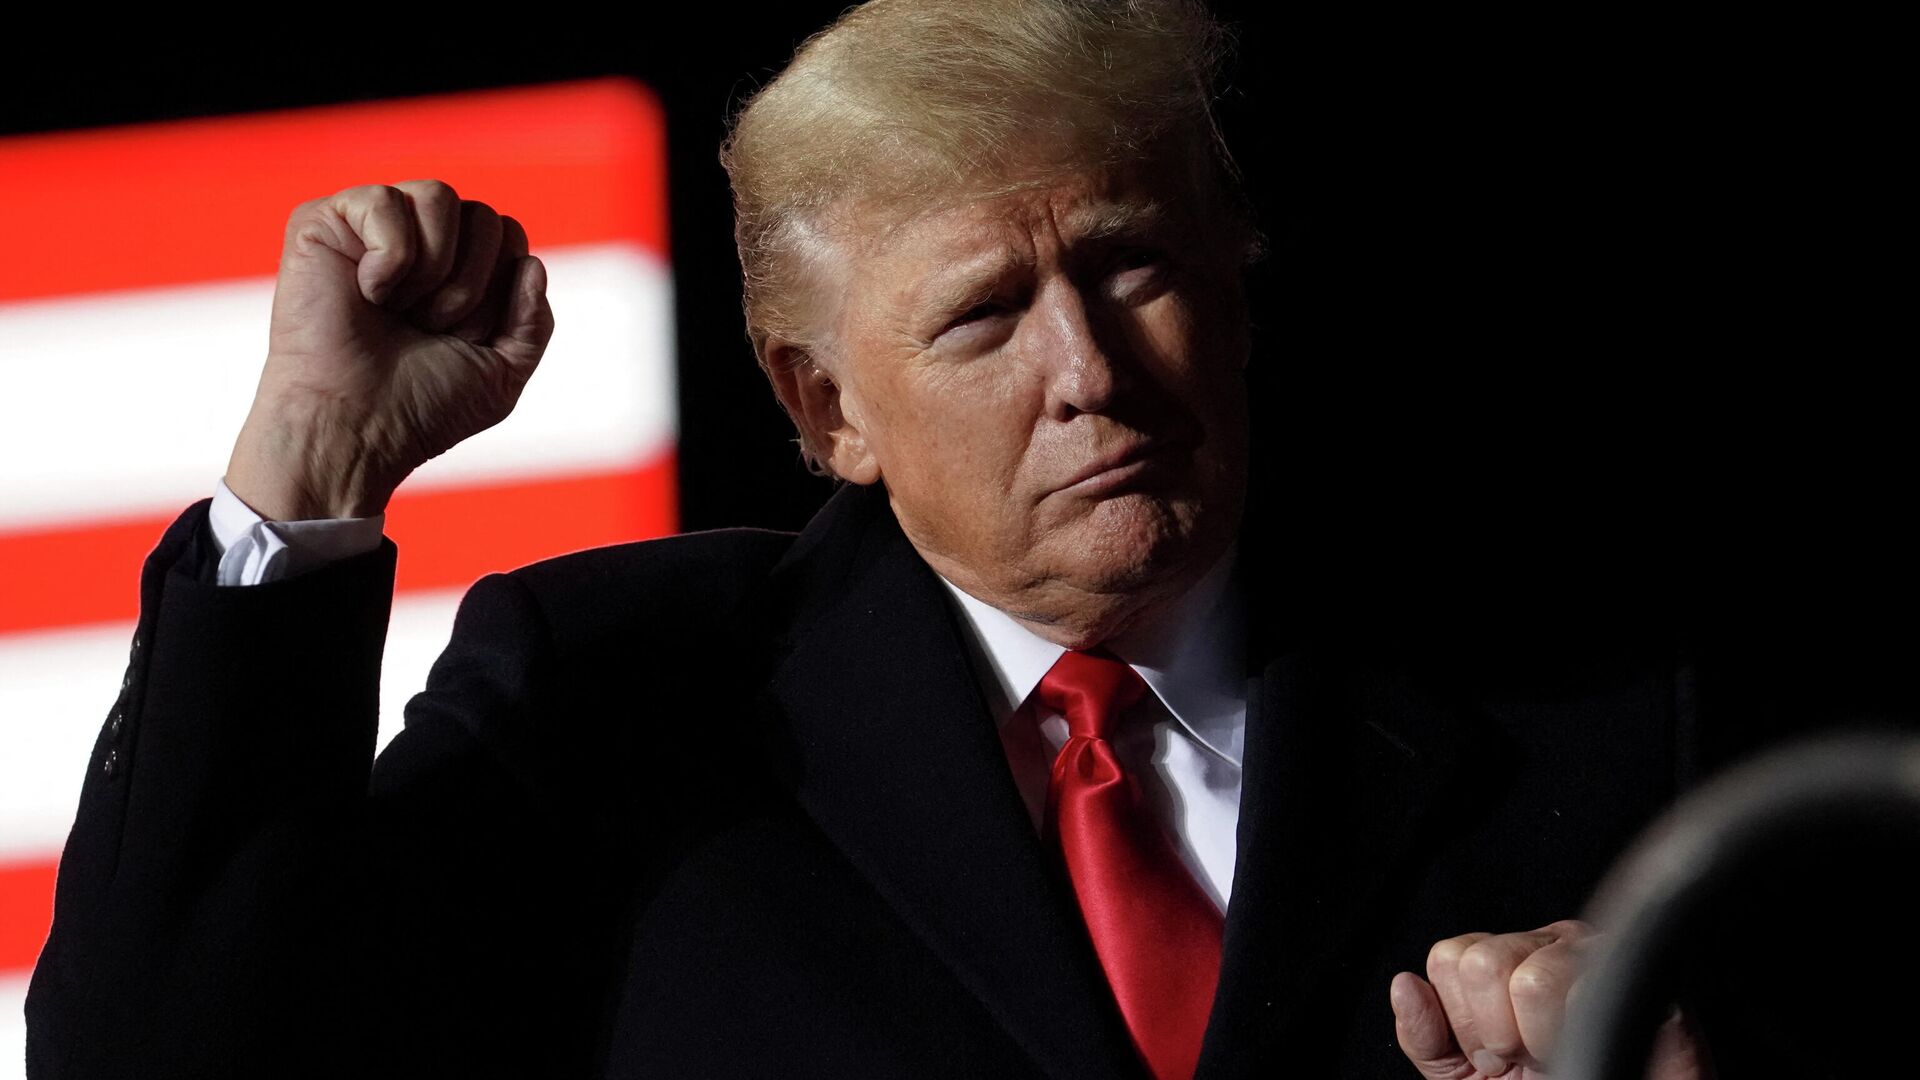 Former U.S. President Donald Trump gestures as he speaks during a rally, in Conroe, Texas, U.S., January 29, 2022 - Sputnik International, 1920, 09.02.2022